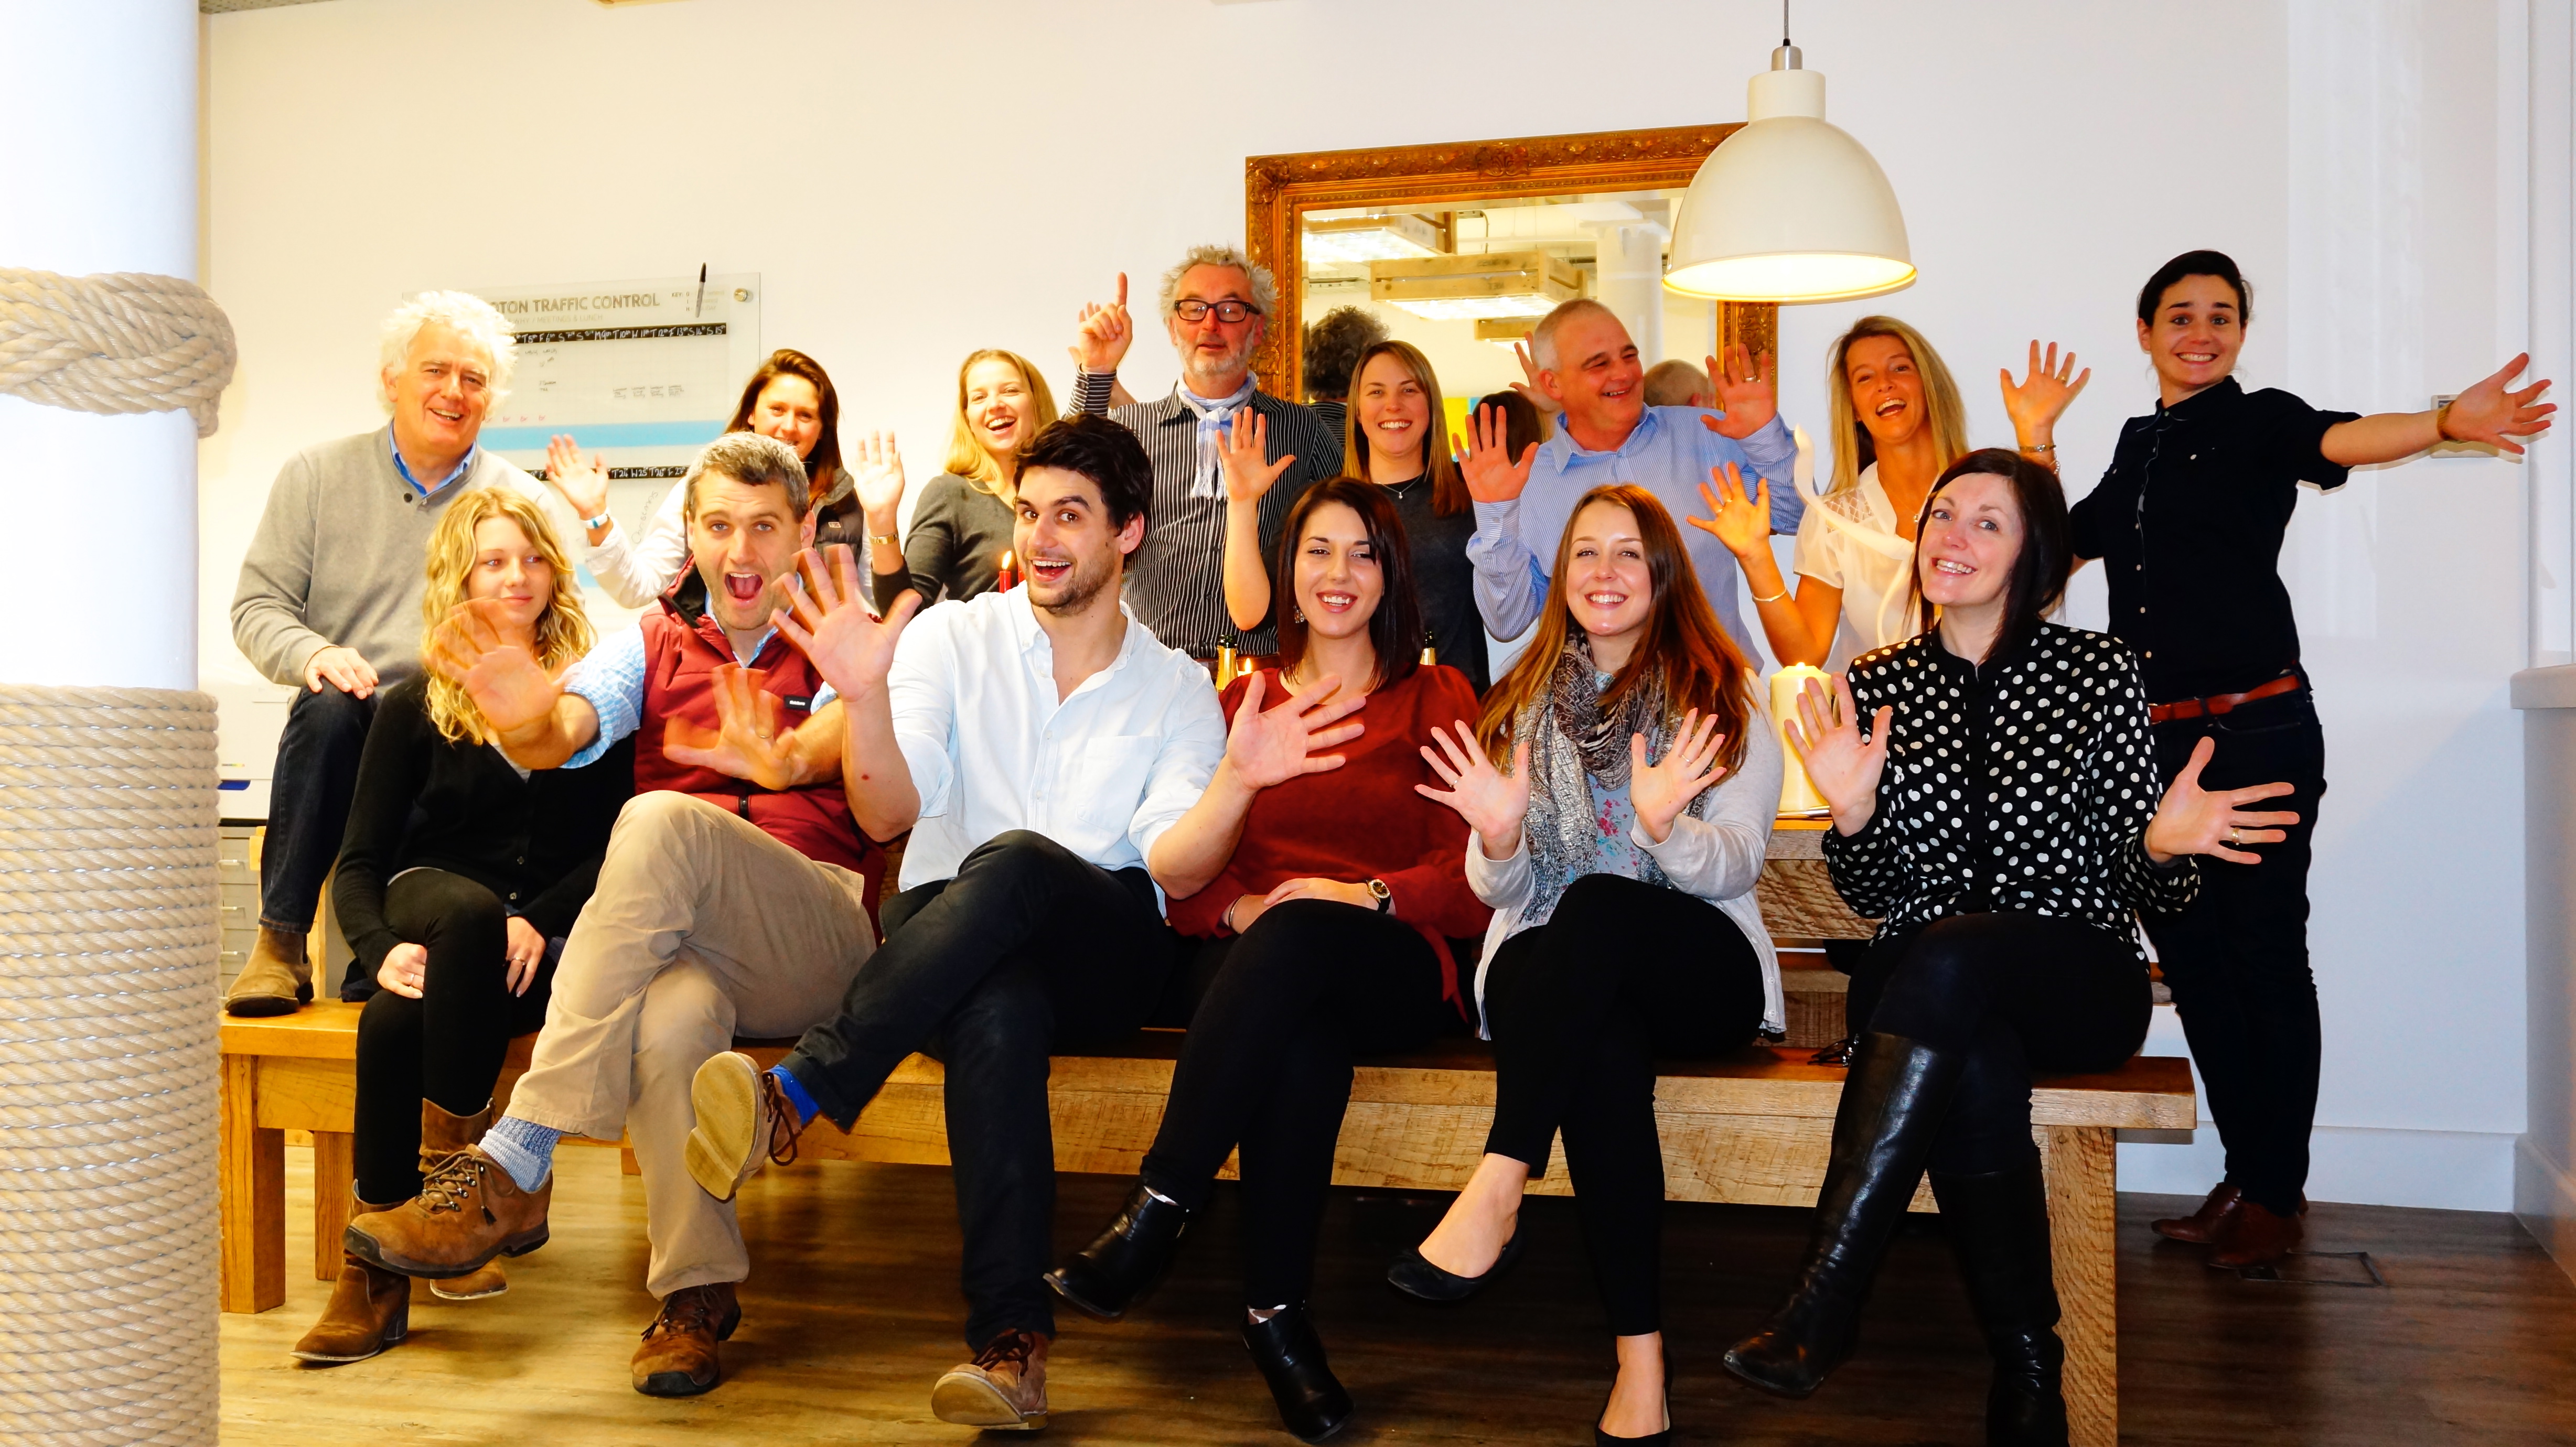 The Peloton team celebrating the company's first birthday